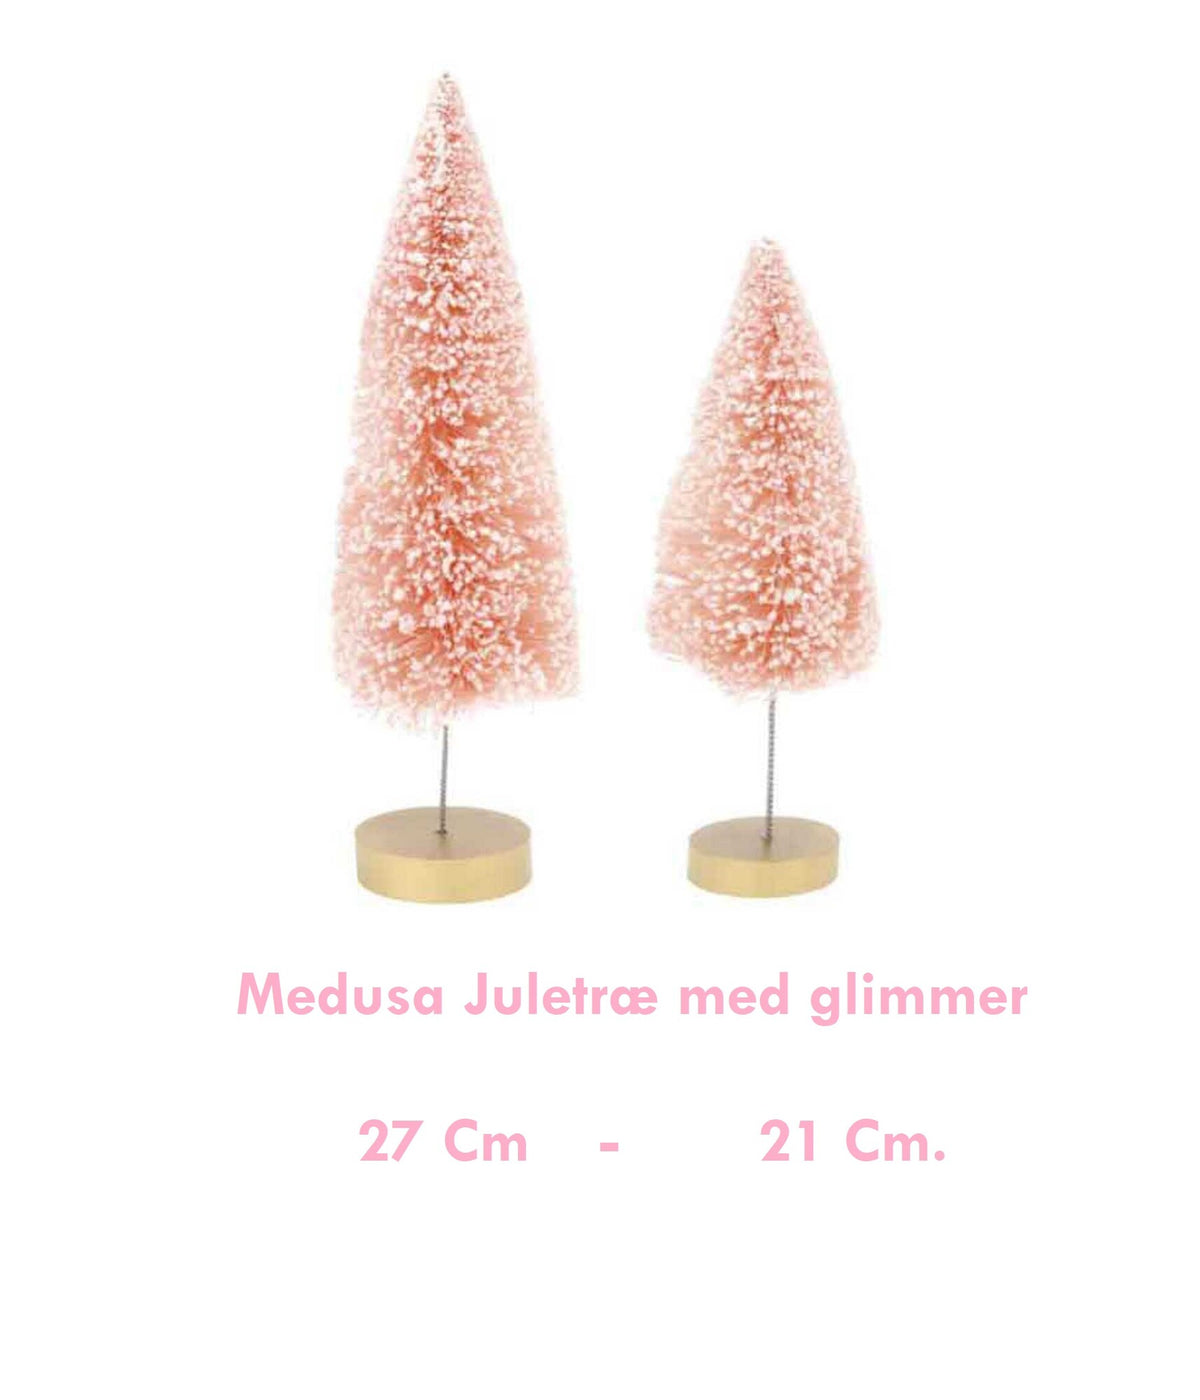 MEDUSA JULETRÆ I ROSA MED GLIMMER 27 cm